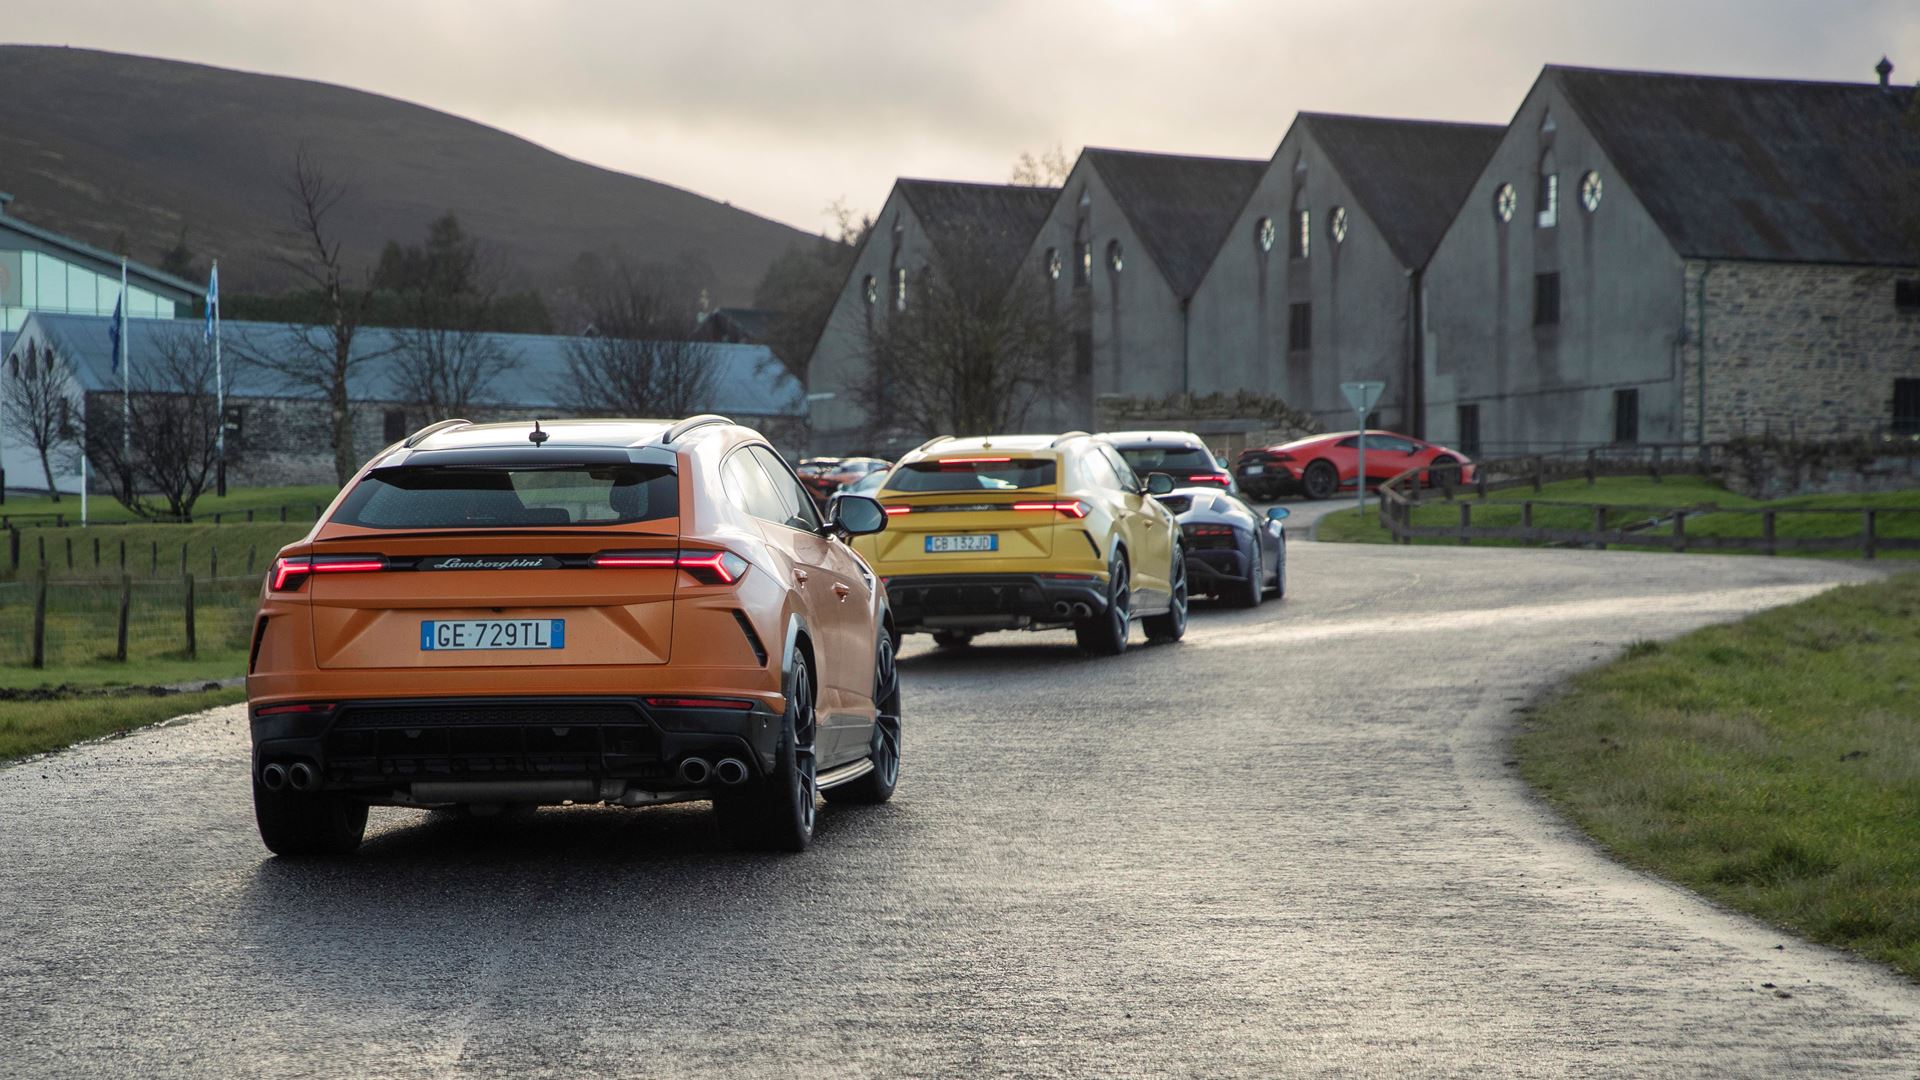 Automobili Lamborghini: Cars, stars and art in the Scottish Cairngorms - Image 4